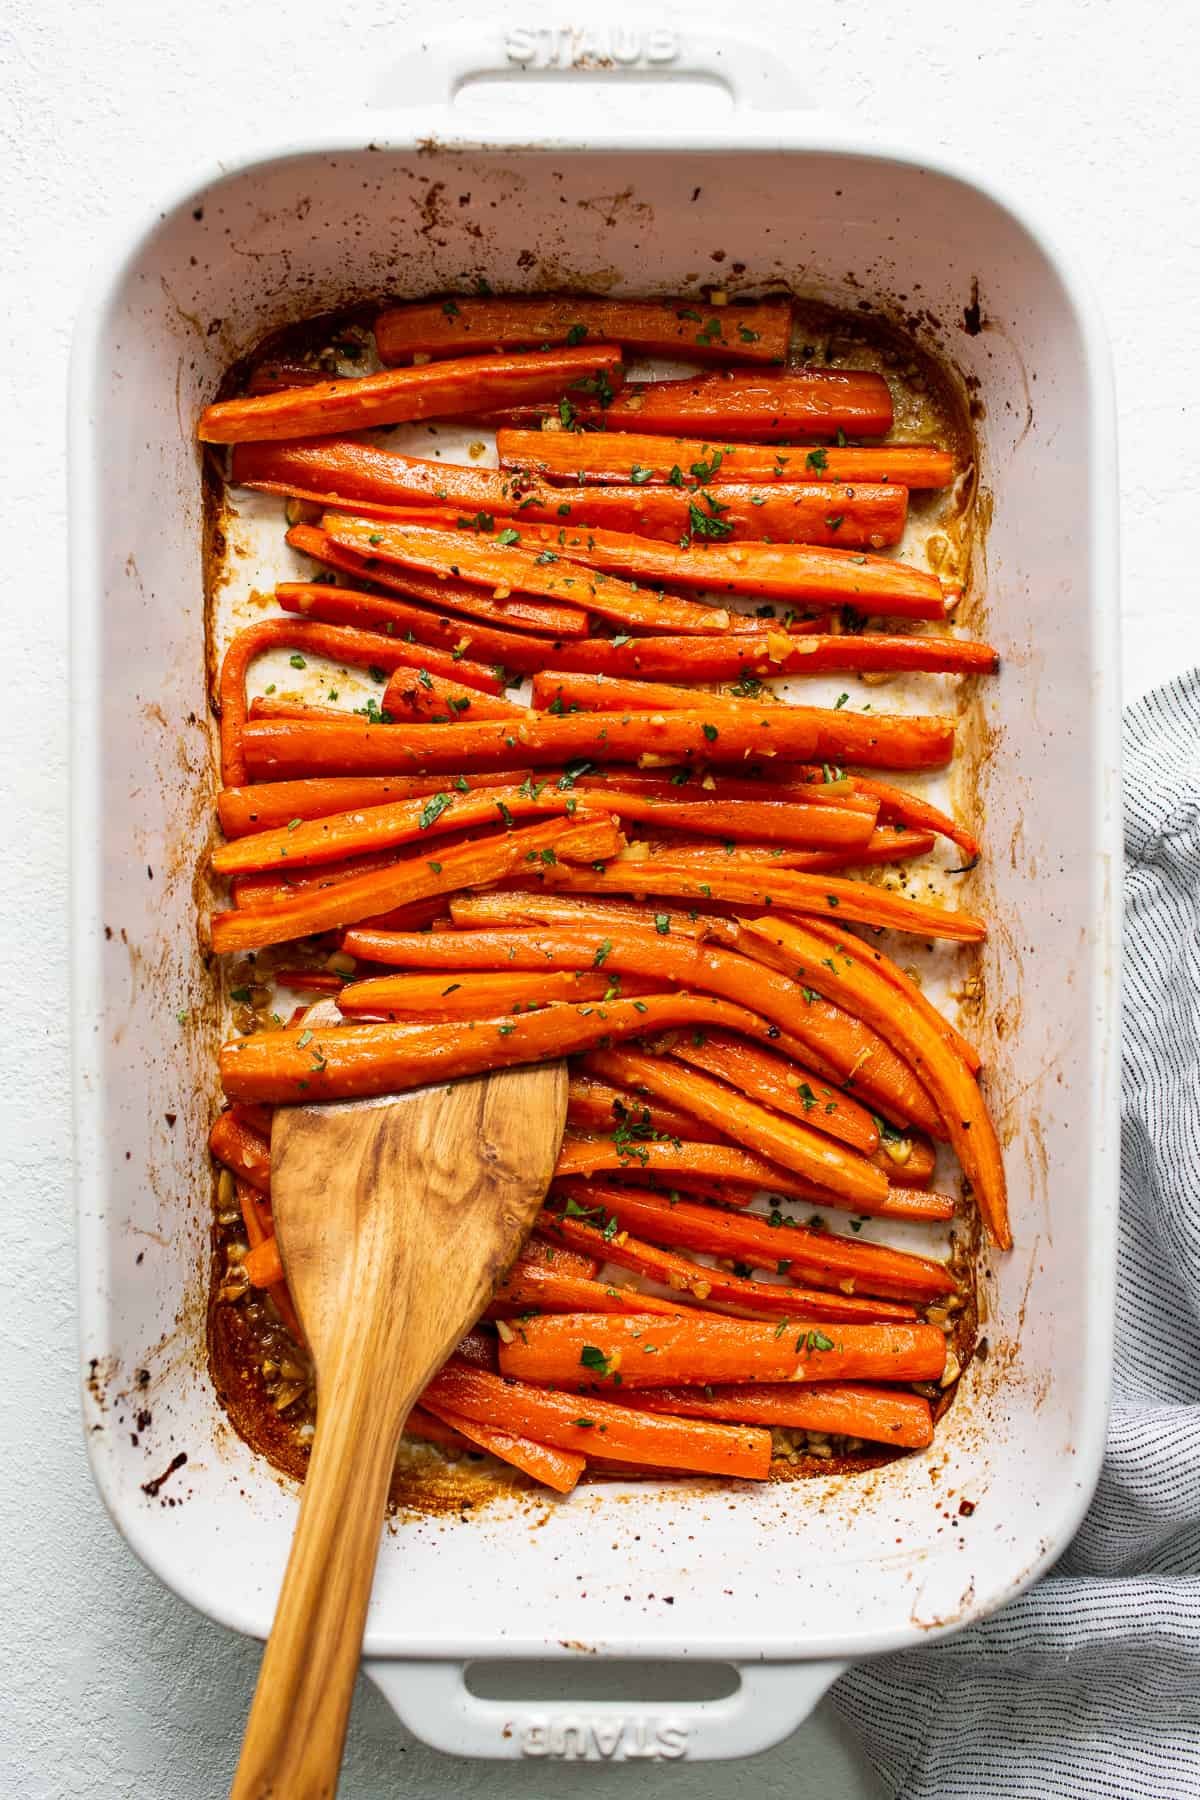 هویج لعاب شده سیر در یک قابلمه.